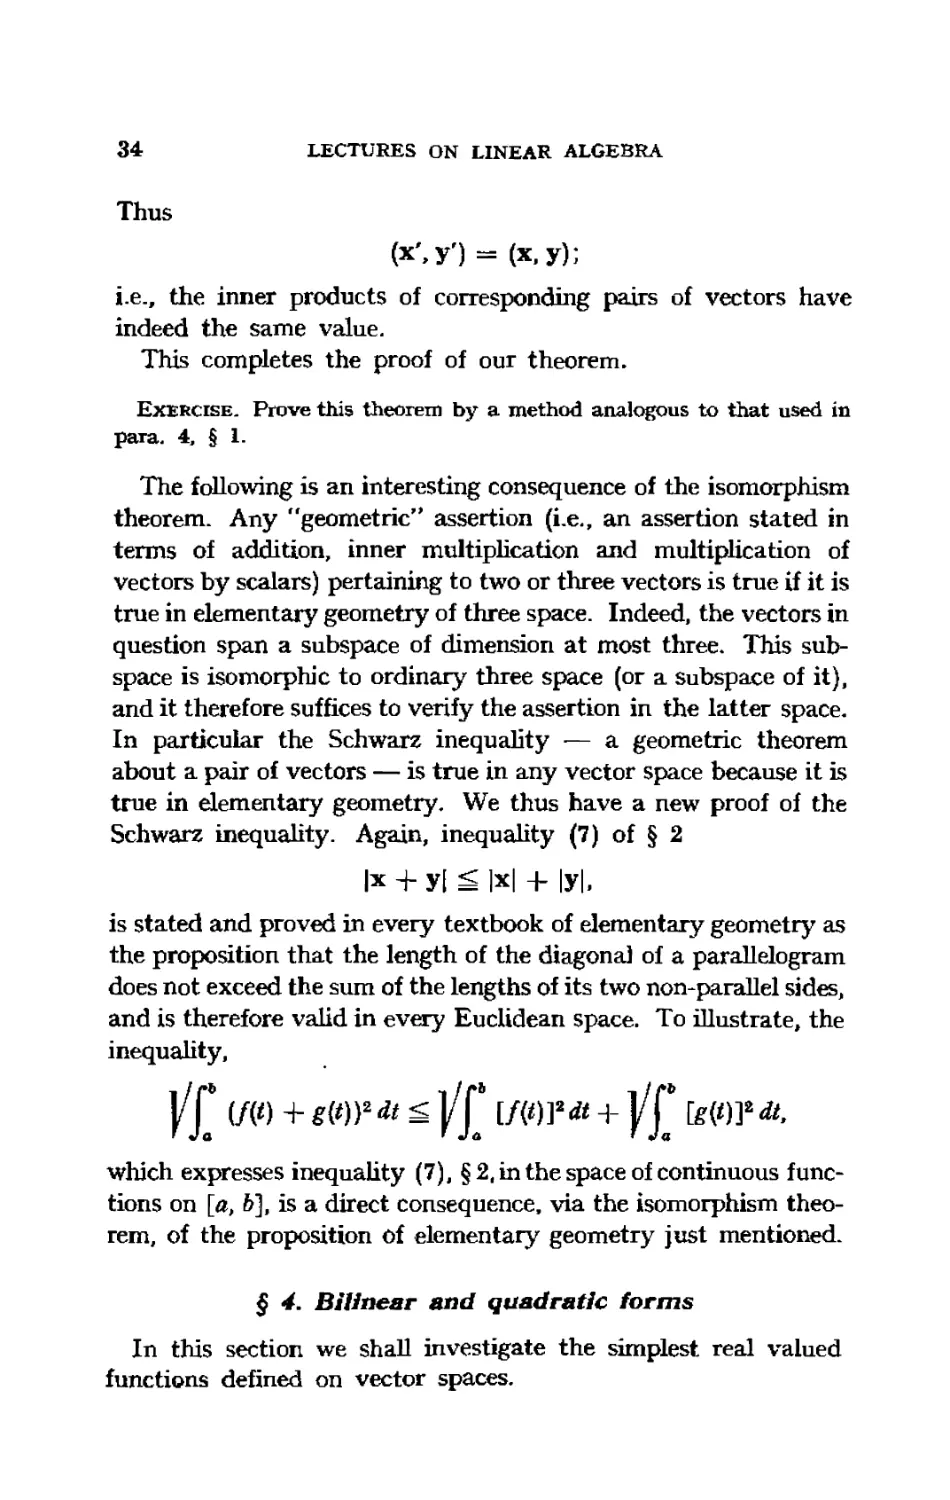 §4. Bilinear and quadratic forms